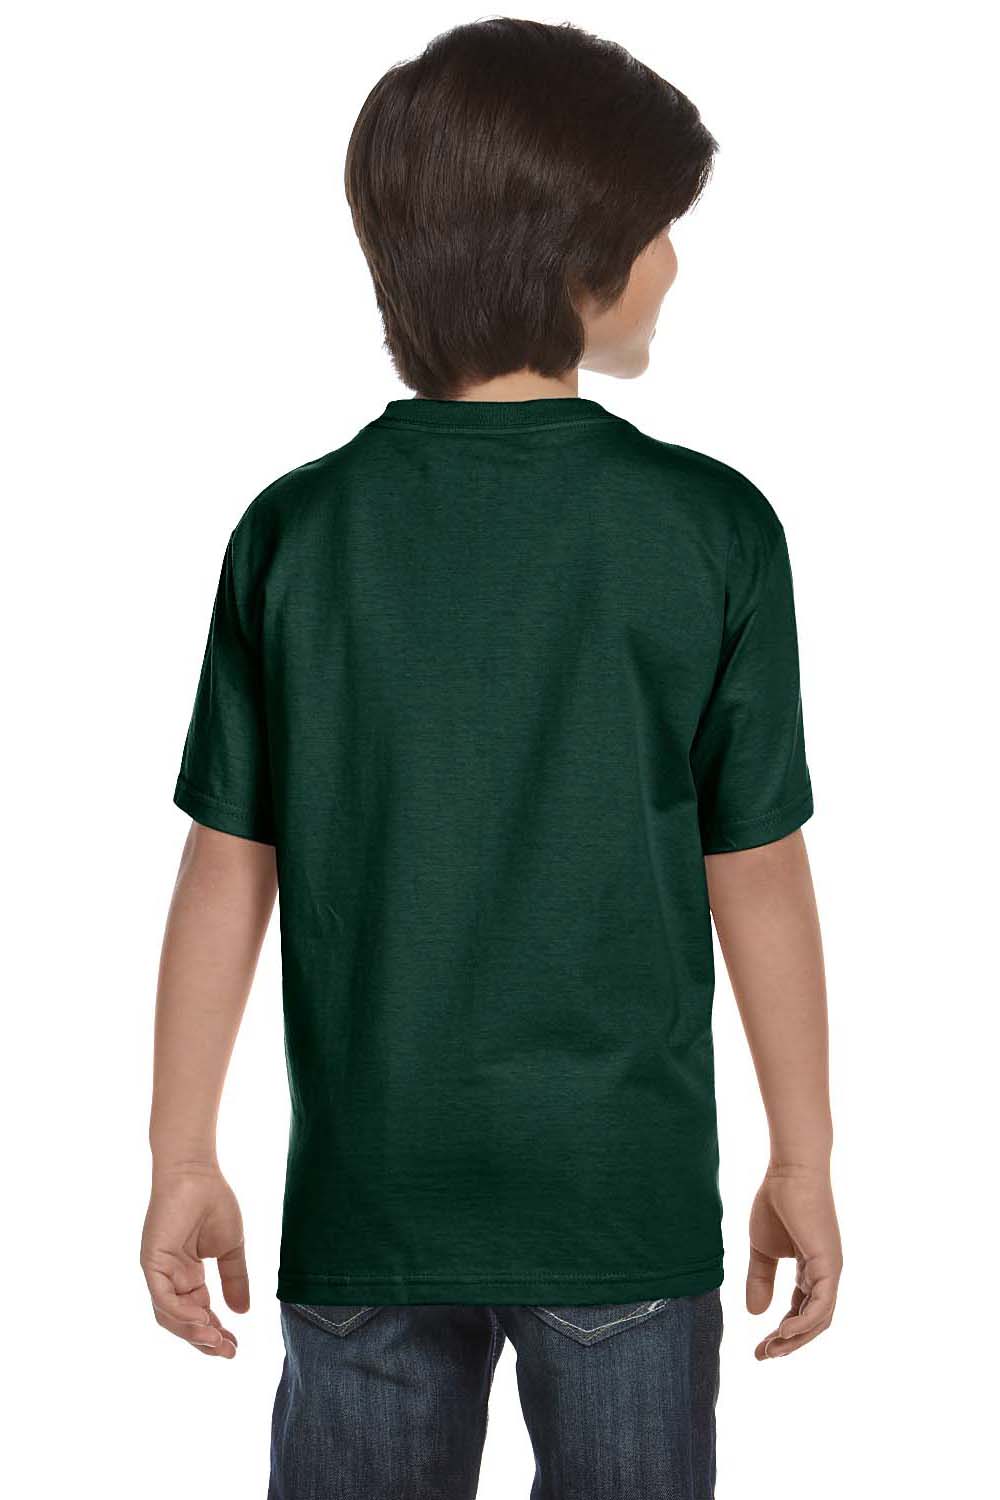 Hanes 5480 Youth ComfortSoft Short Sleeve Crewneck T-Shirt Forest Green Back